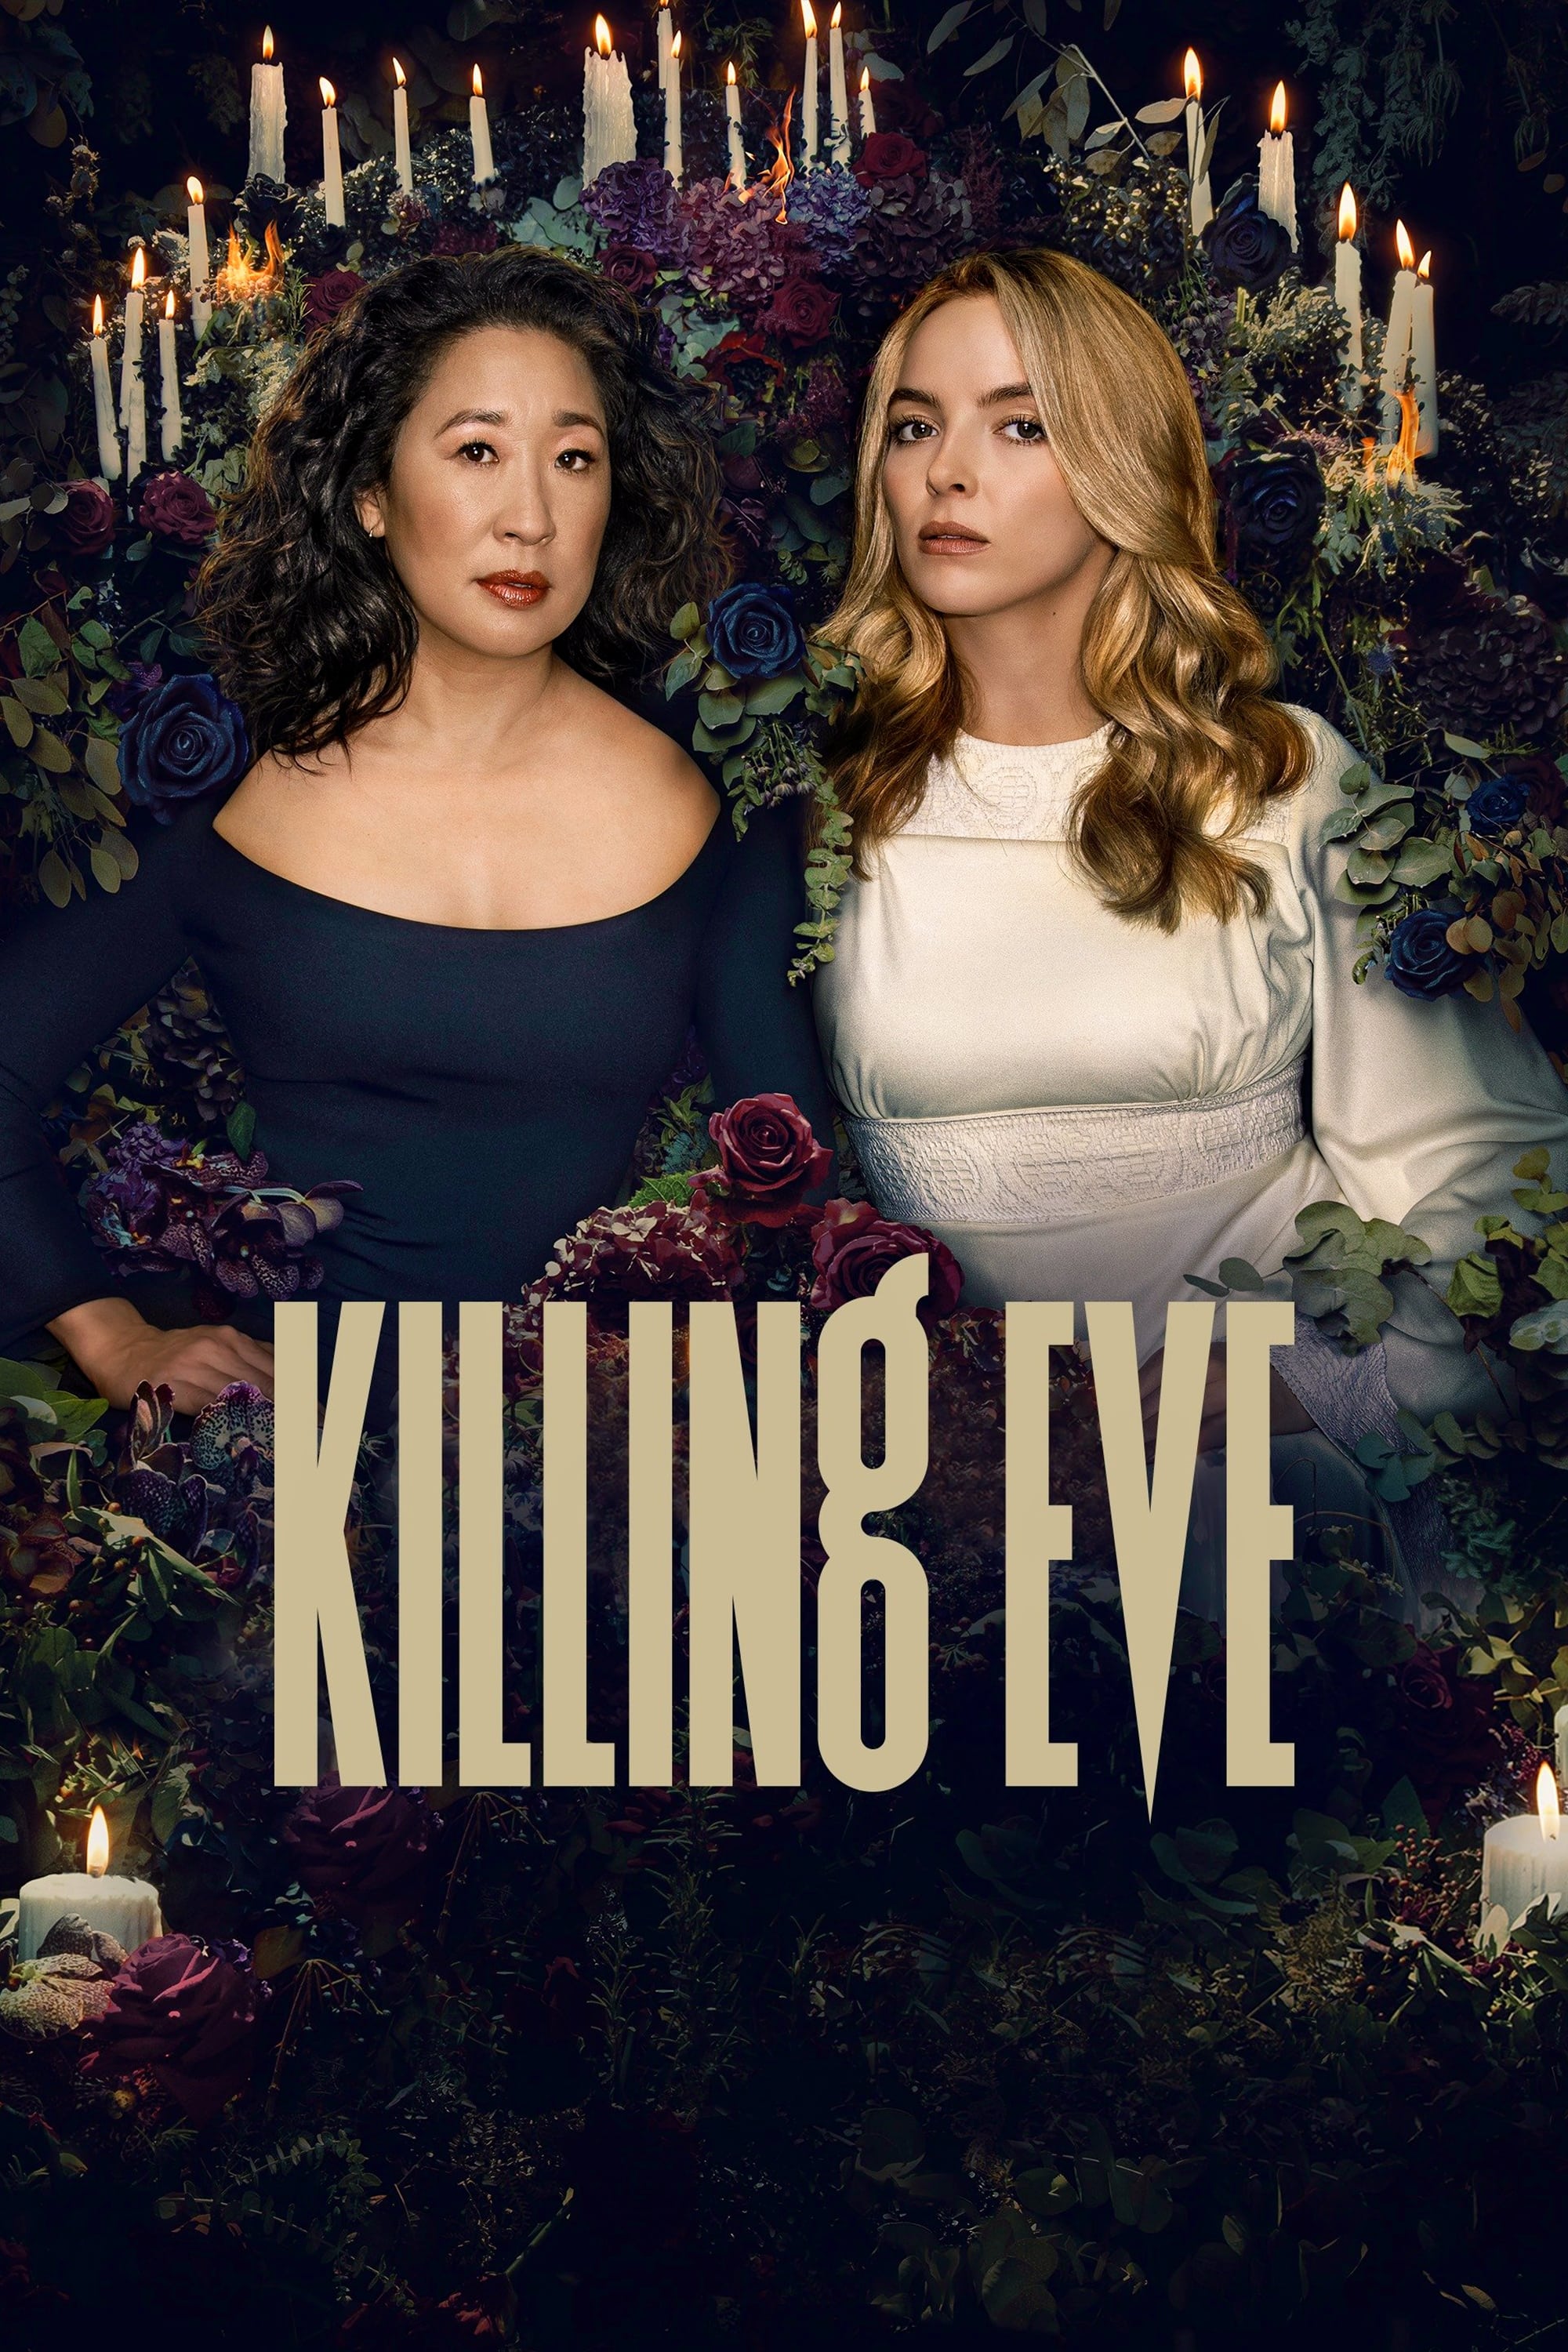 Killing Eve TV Shows About Psycho Killer